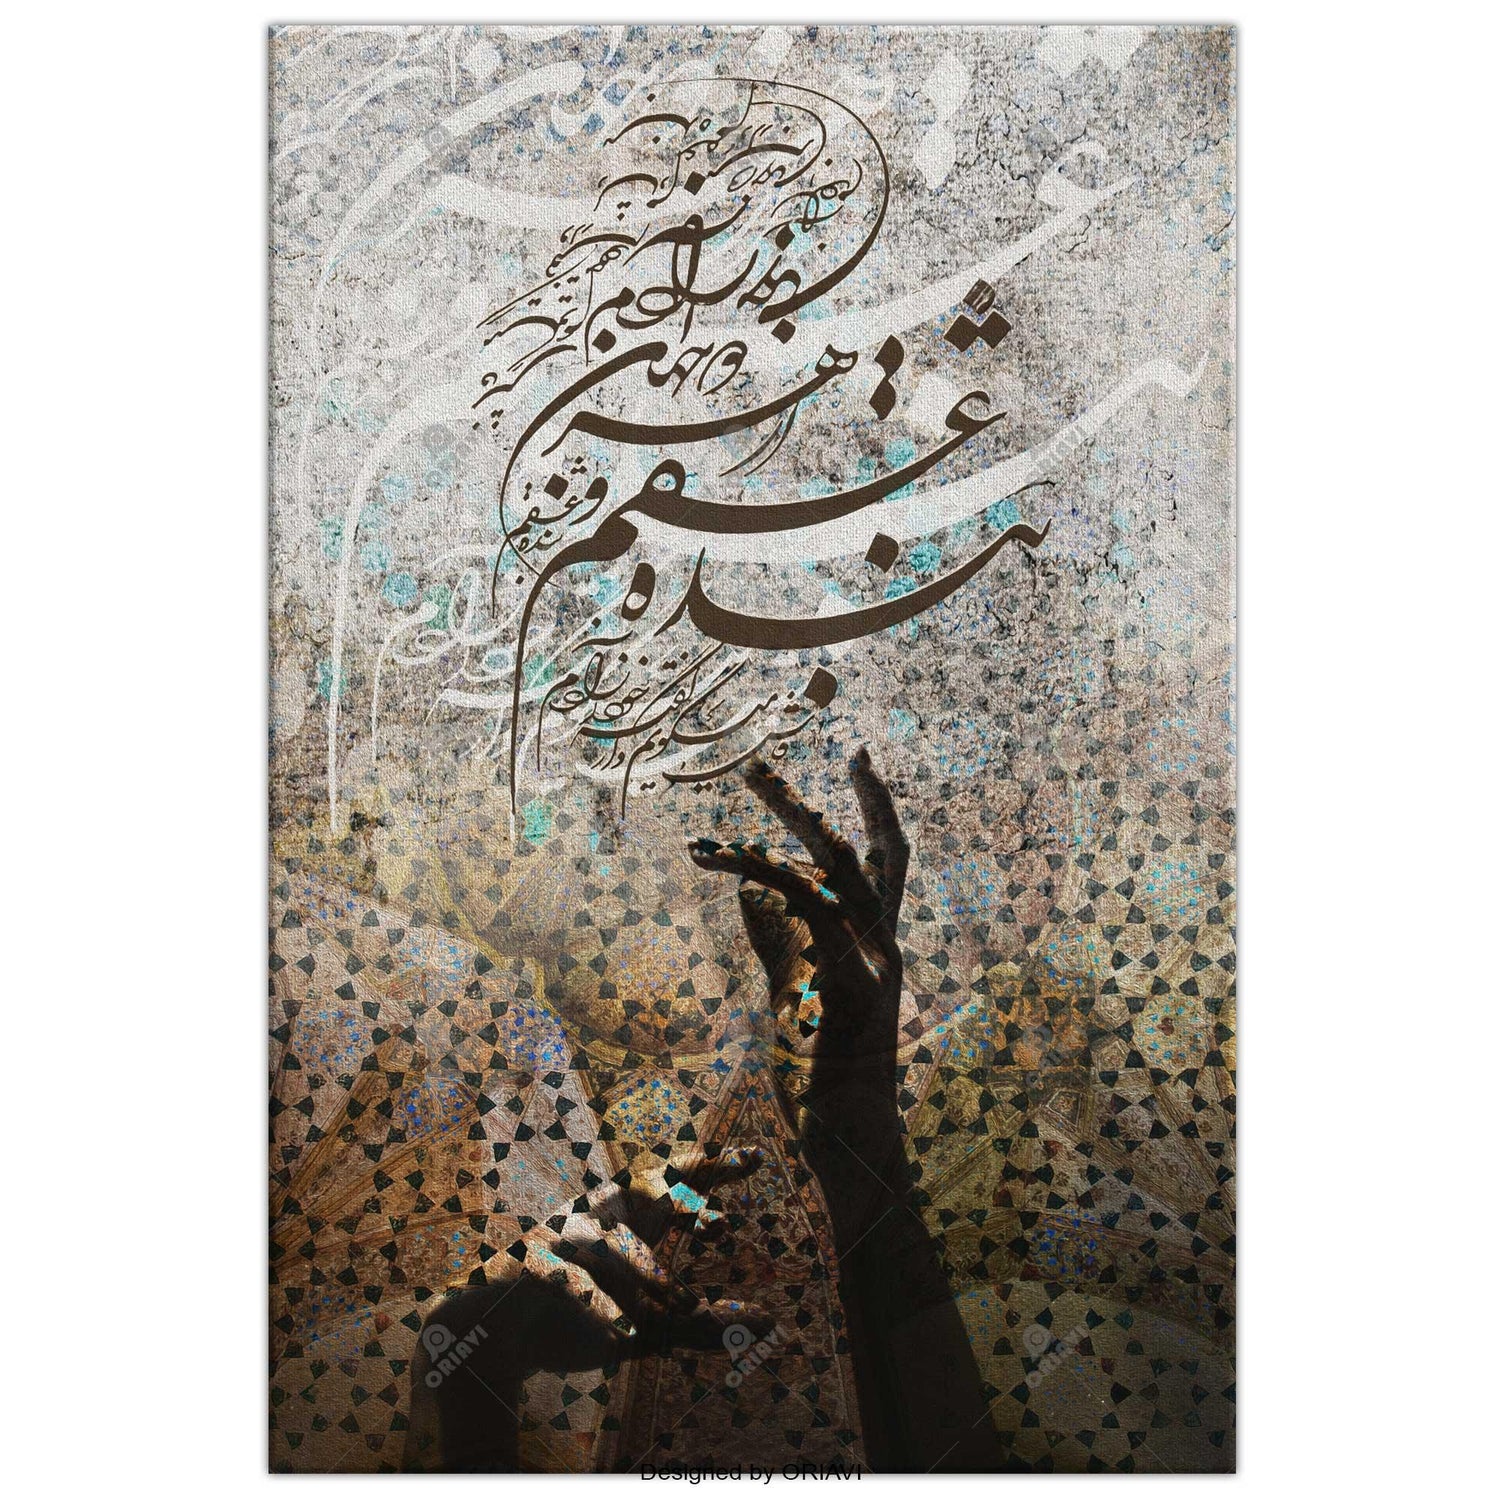 Enslaved to your love | Persian Wall Art | Persian Home Wall Decor - ORIAVI Persian Art, persian artwork for sale, persian calligraphy, persian calligraphy wall art, persian mix media wall art, persian painting, persian wall art